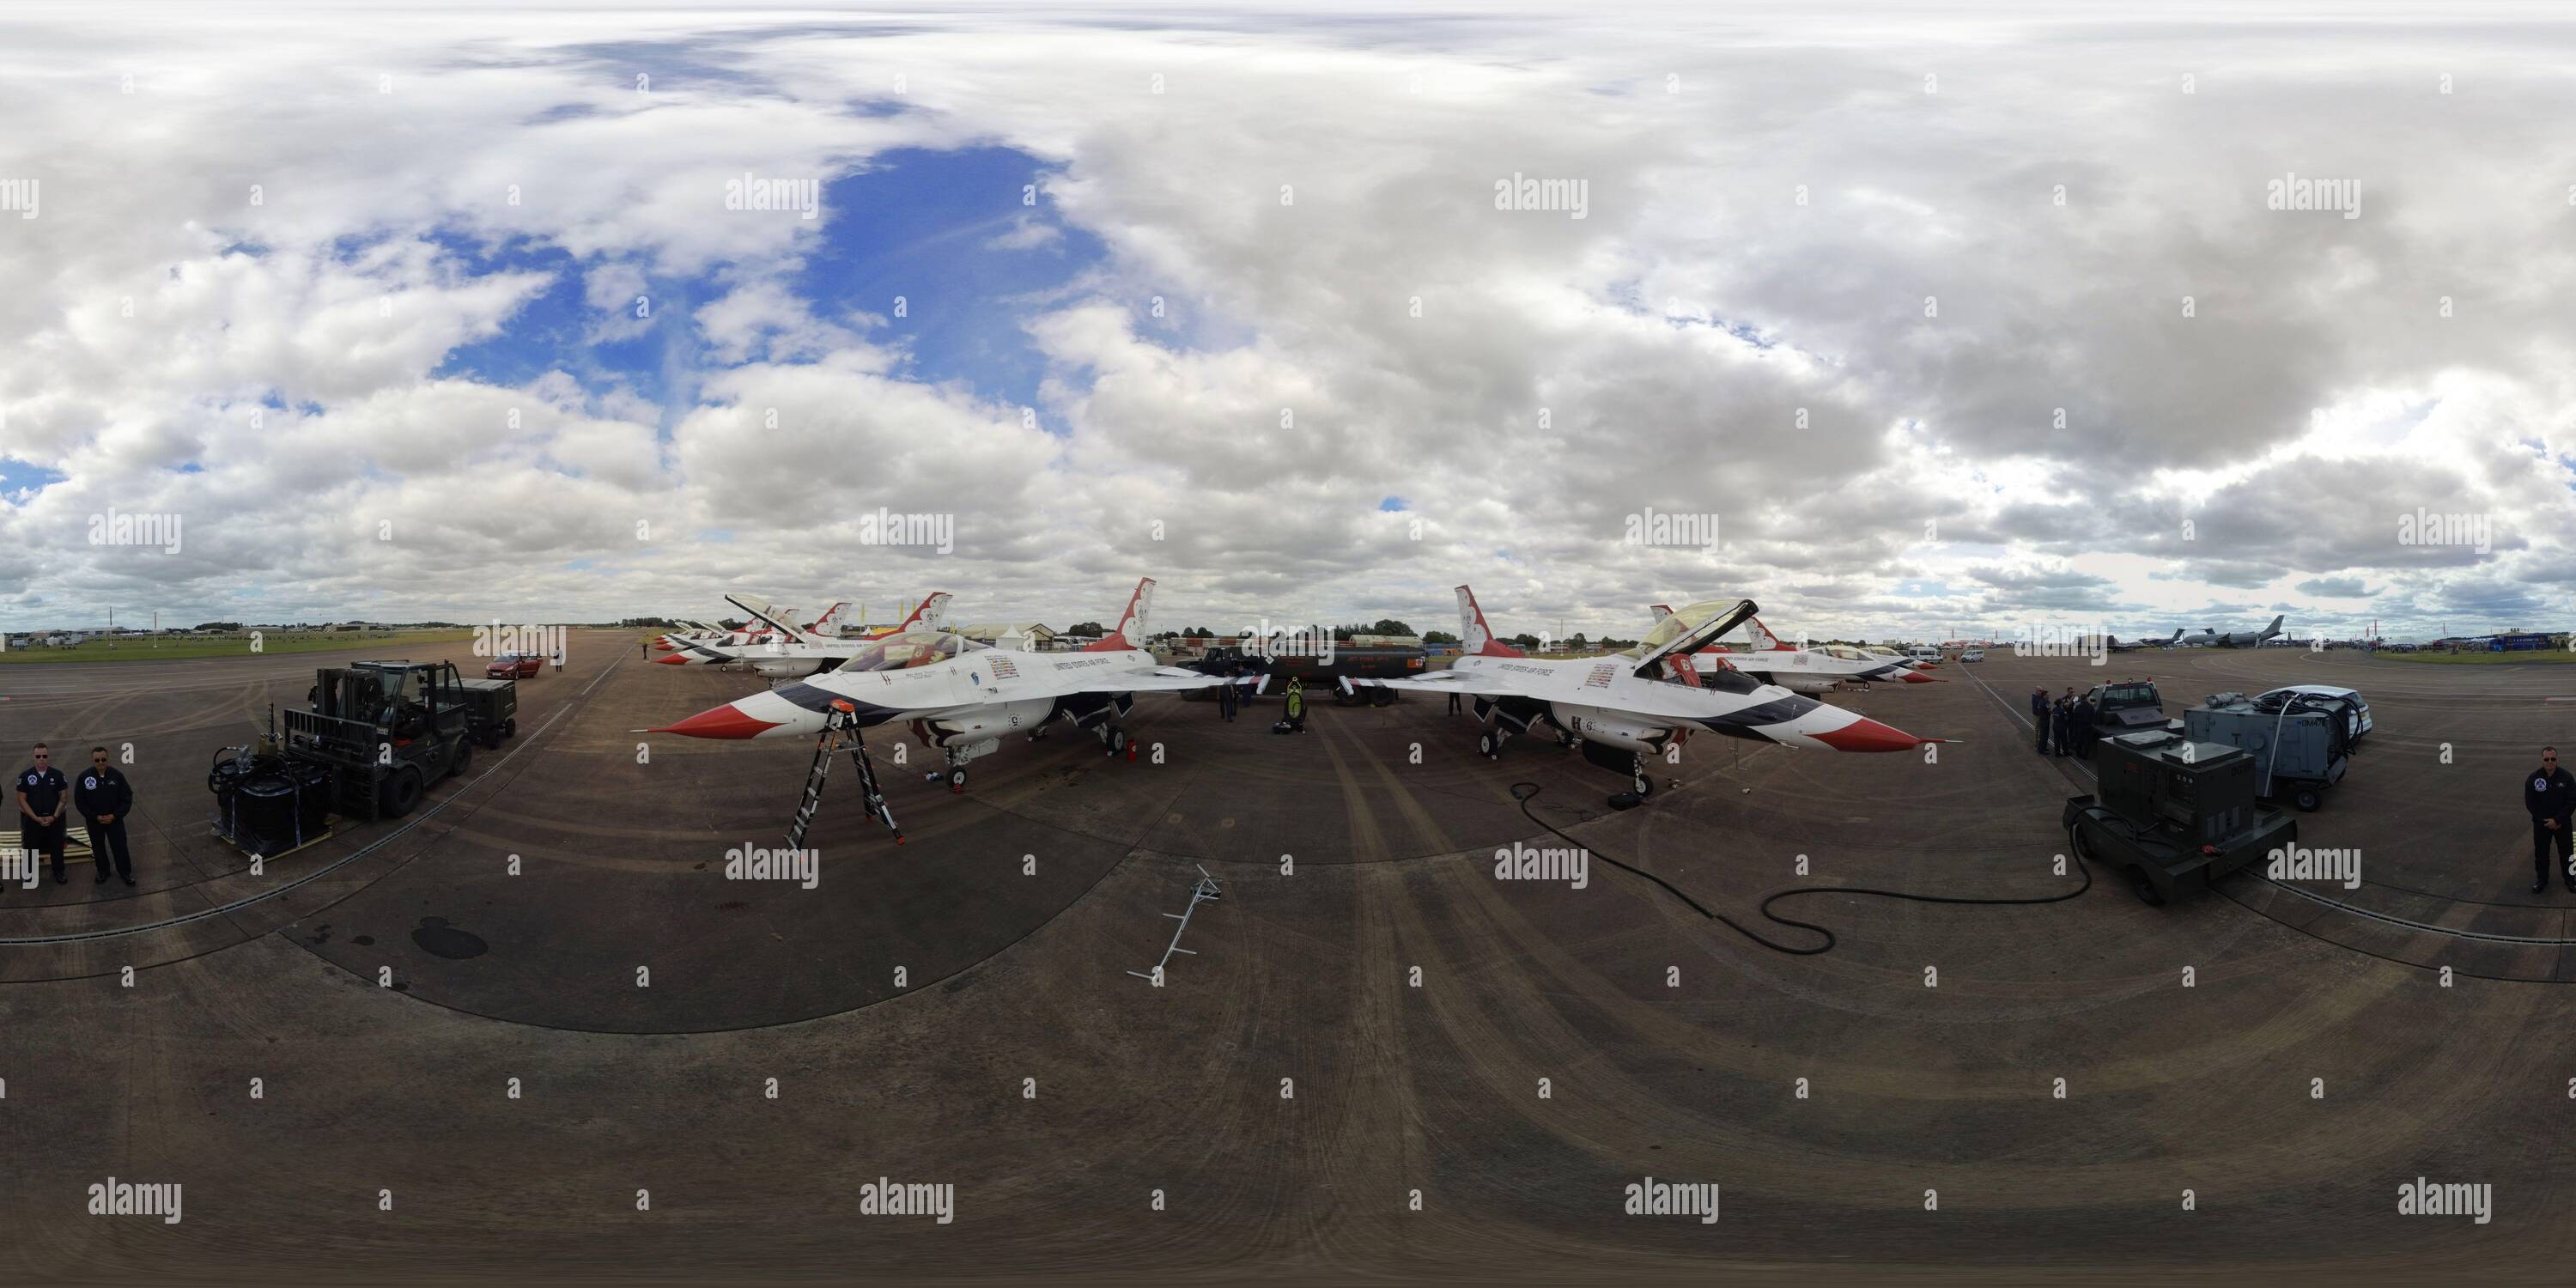 Visualizzazione panoramica a 360 gradi di I Lockheed Martin F16 della USAF Thunderbirds Display Team al Royal International Air Tattoo di RAF Fairford.